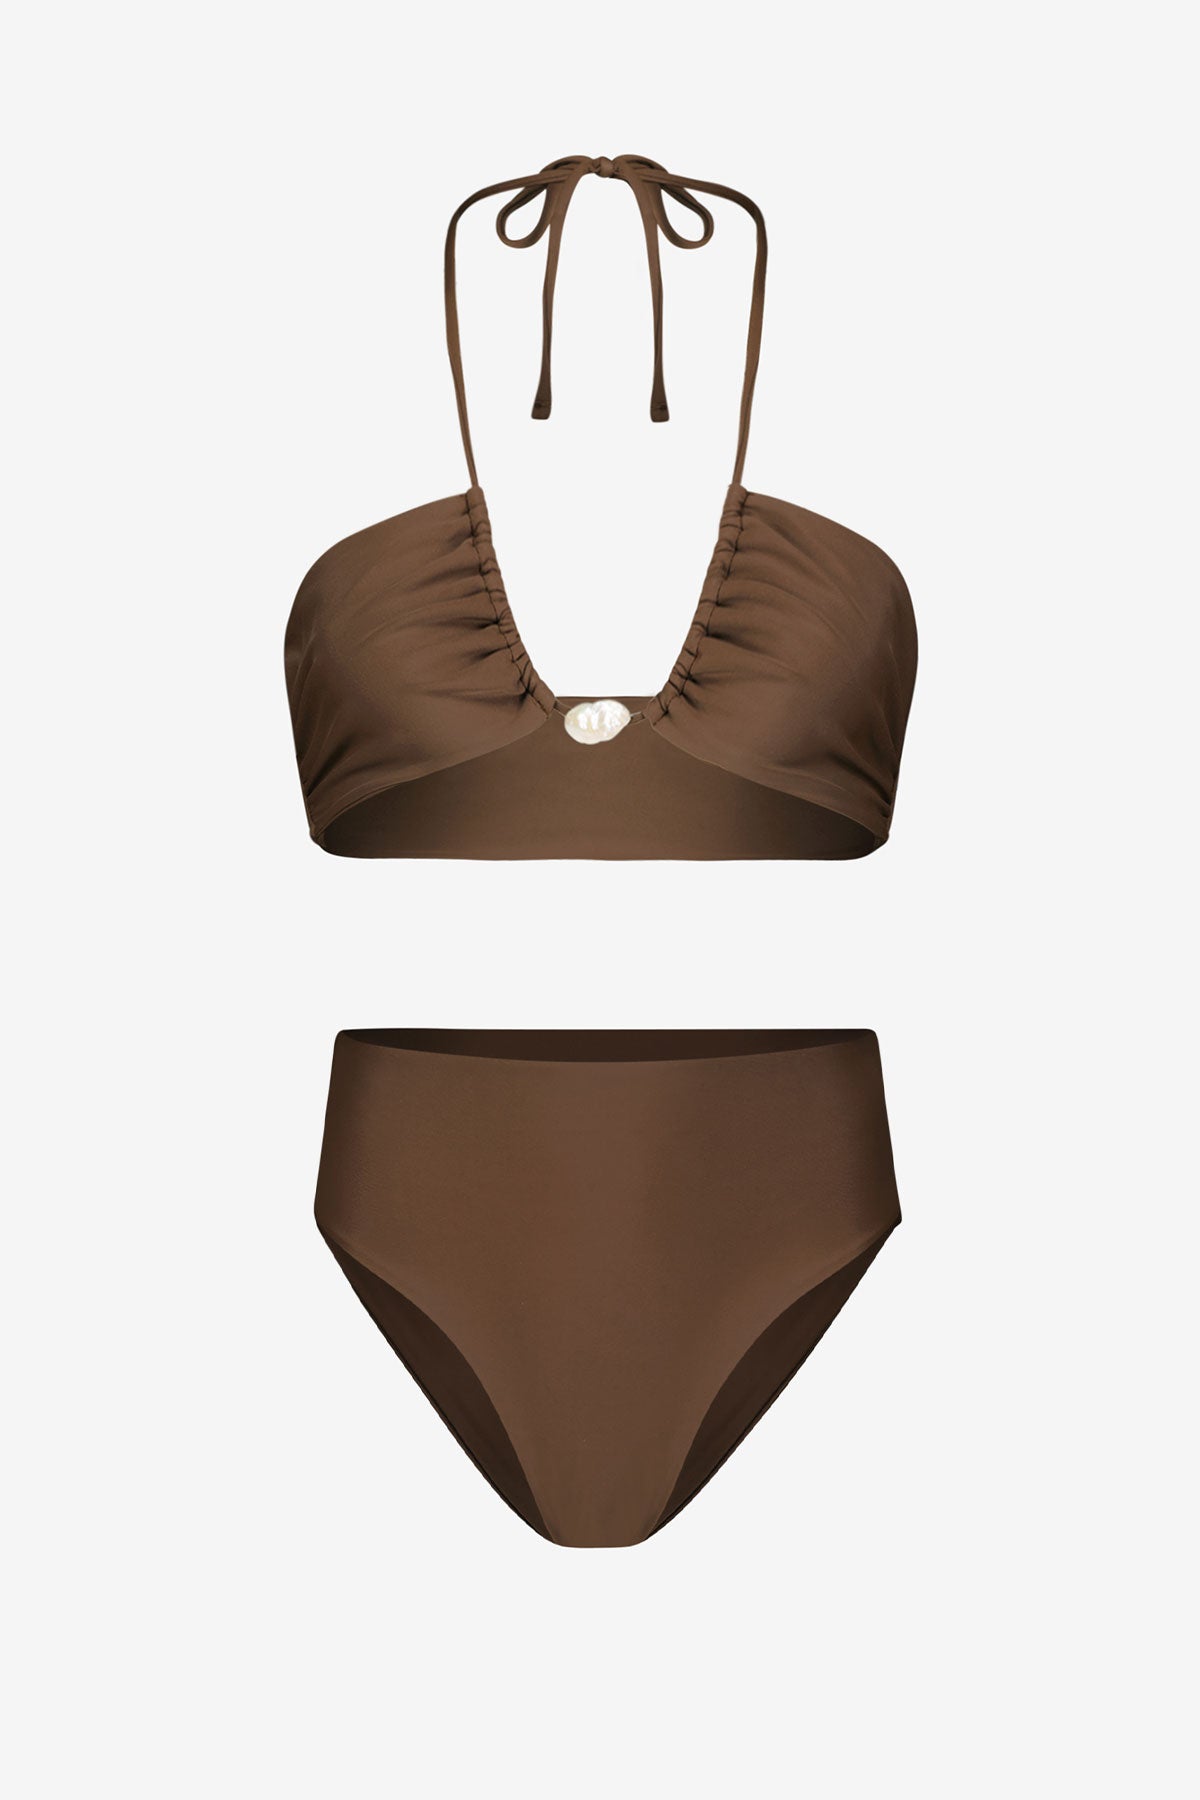 Bahia Bikini with Pearl & High-Waisted Bottom in Brown